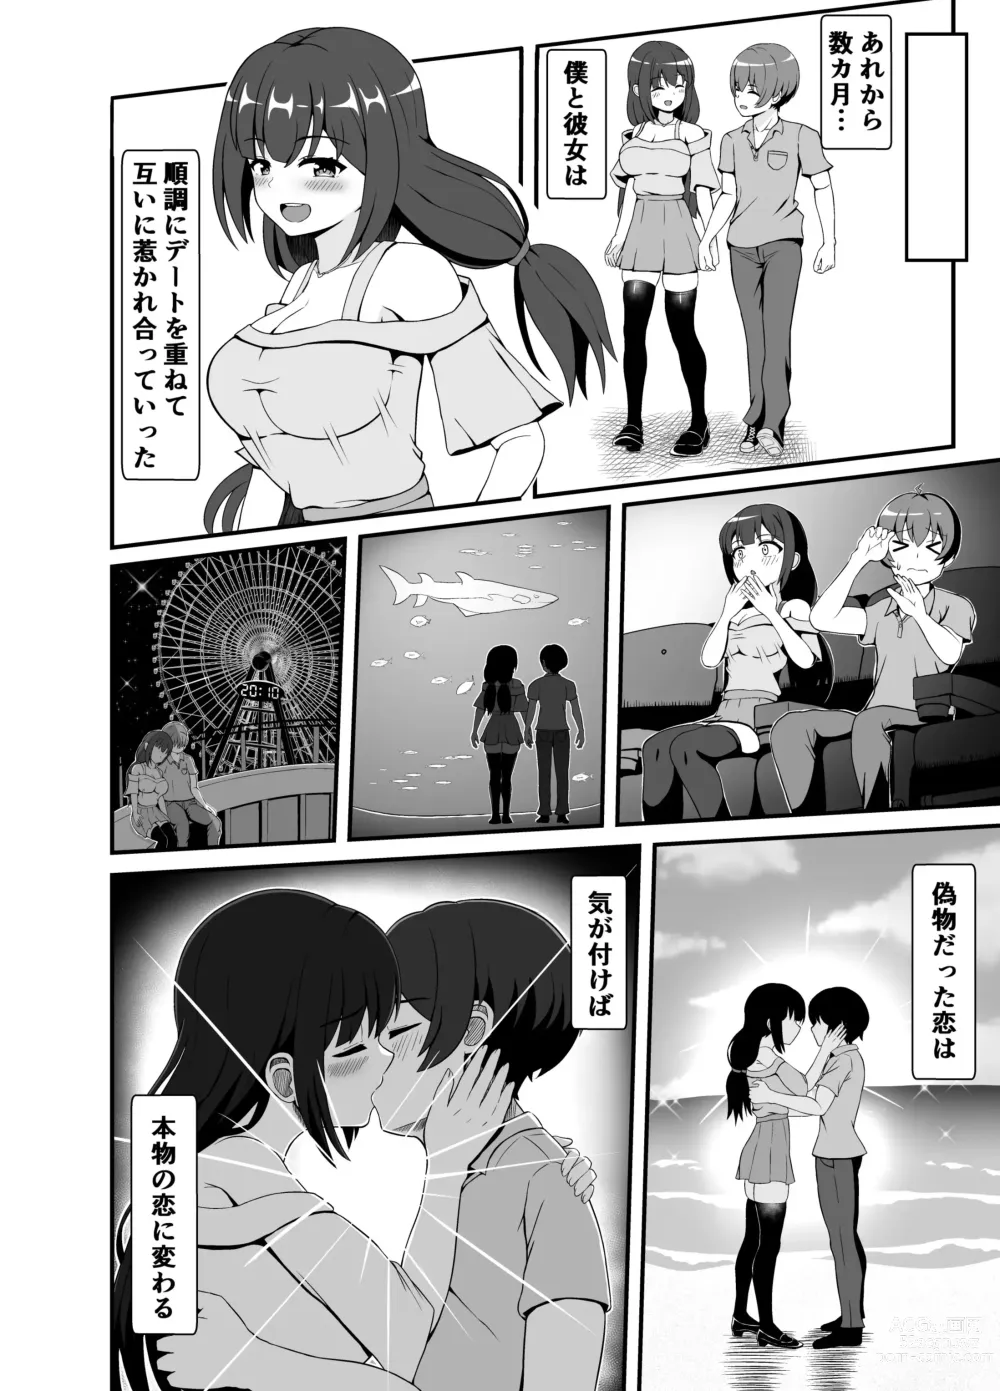 Page 5 of doujinshi 罰ゲームで告白した陰キャ彼女がドSだった件